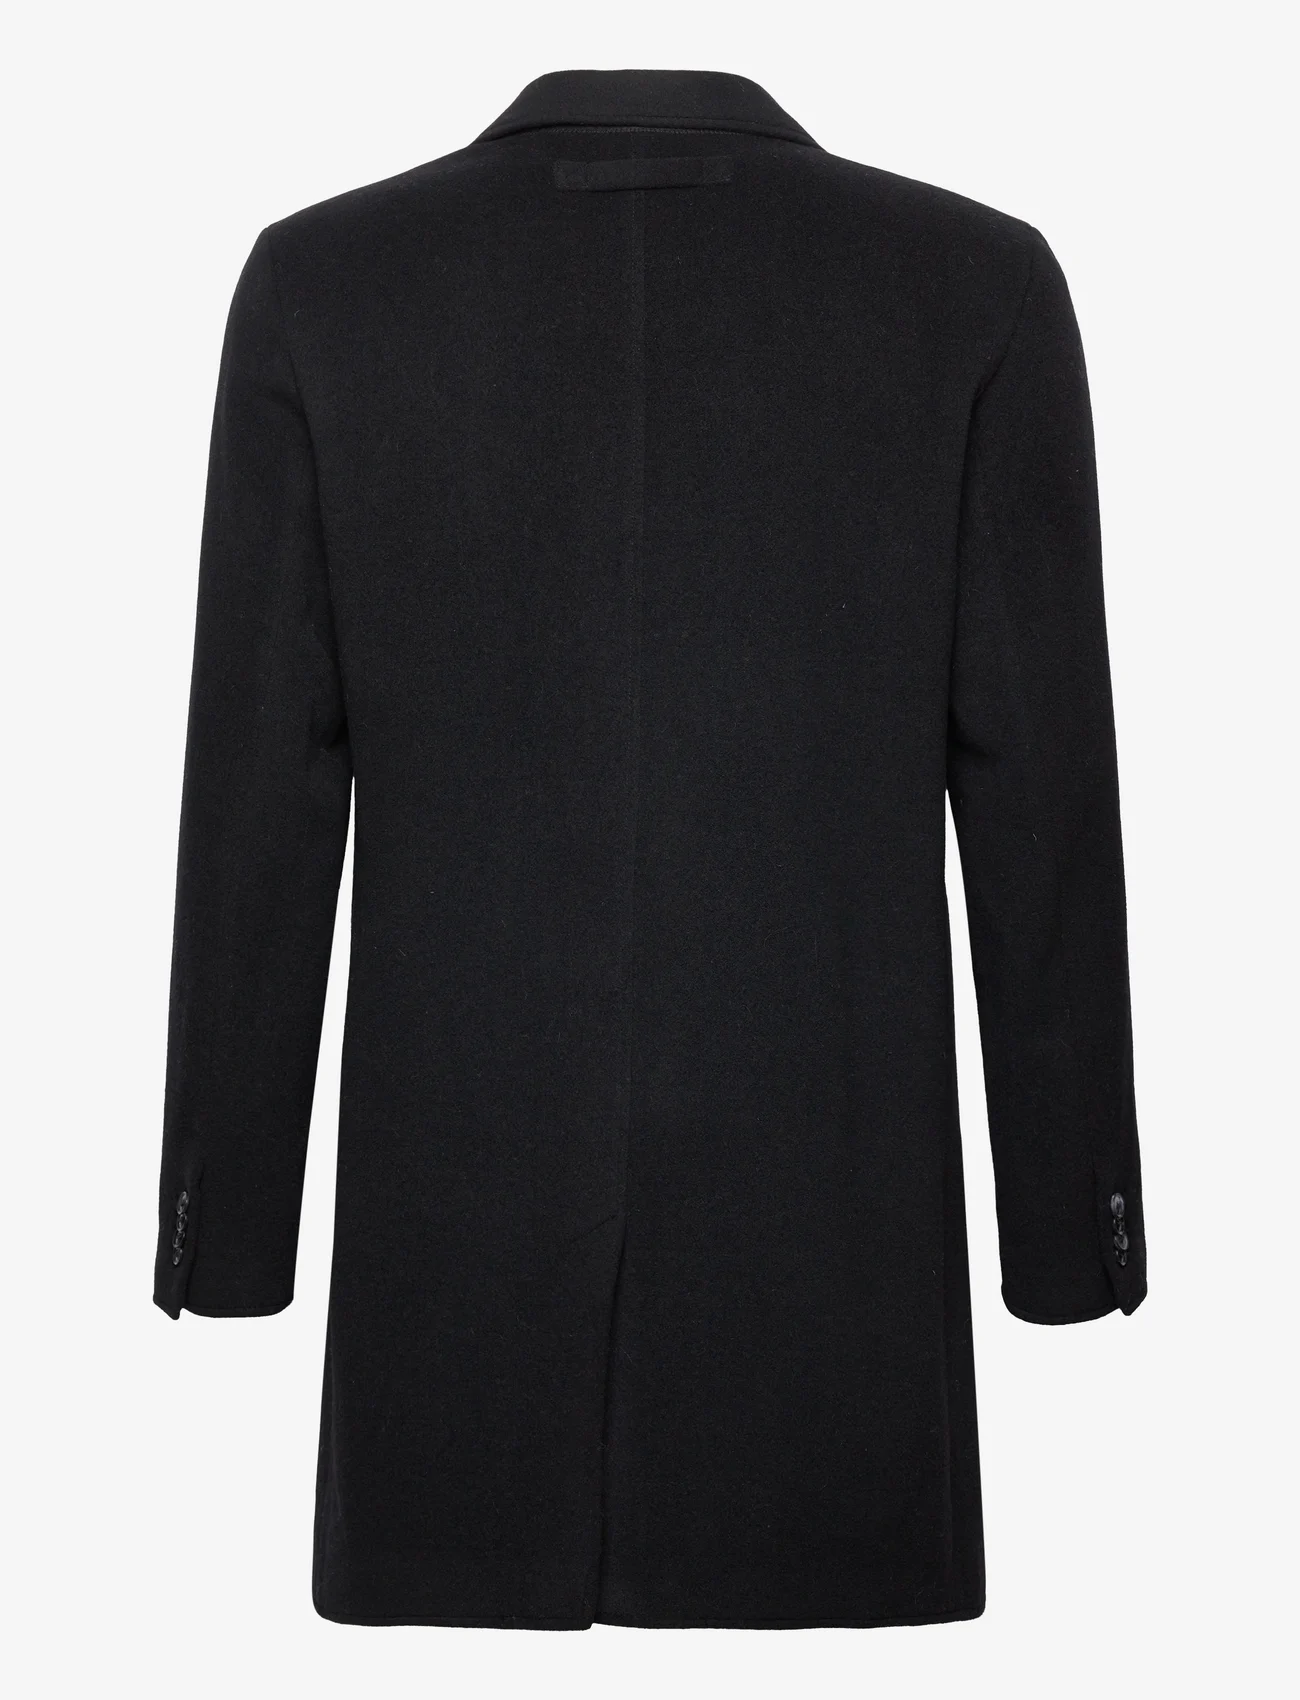 Brixtol Textiles - Ian - winter jackets - black - 1